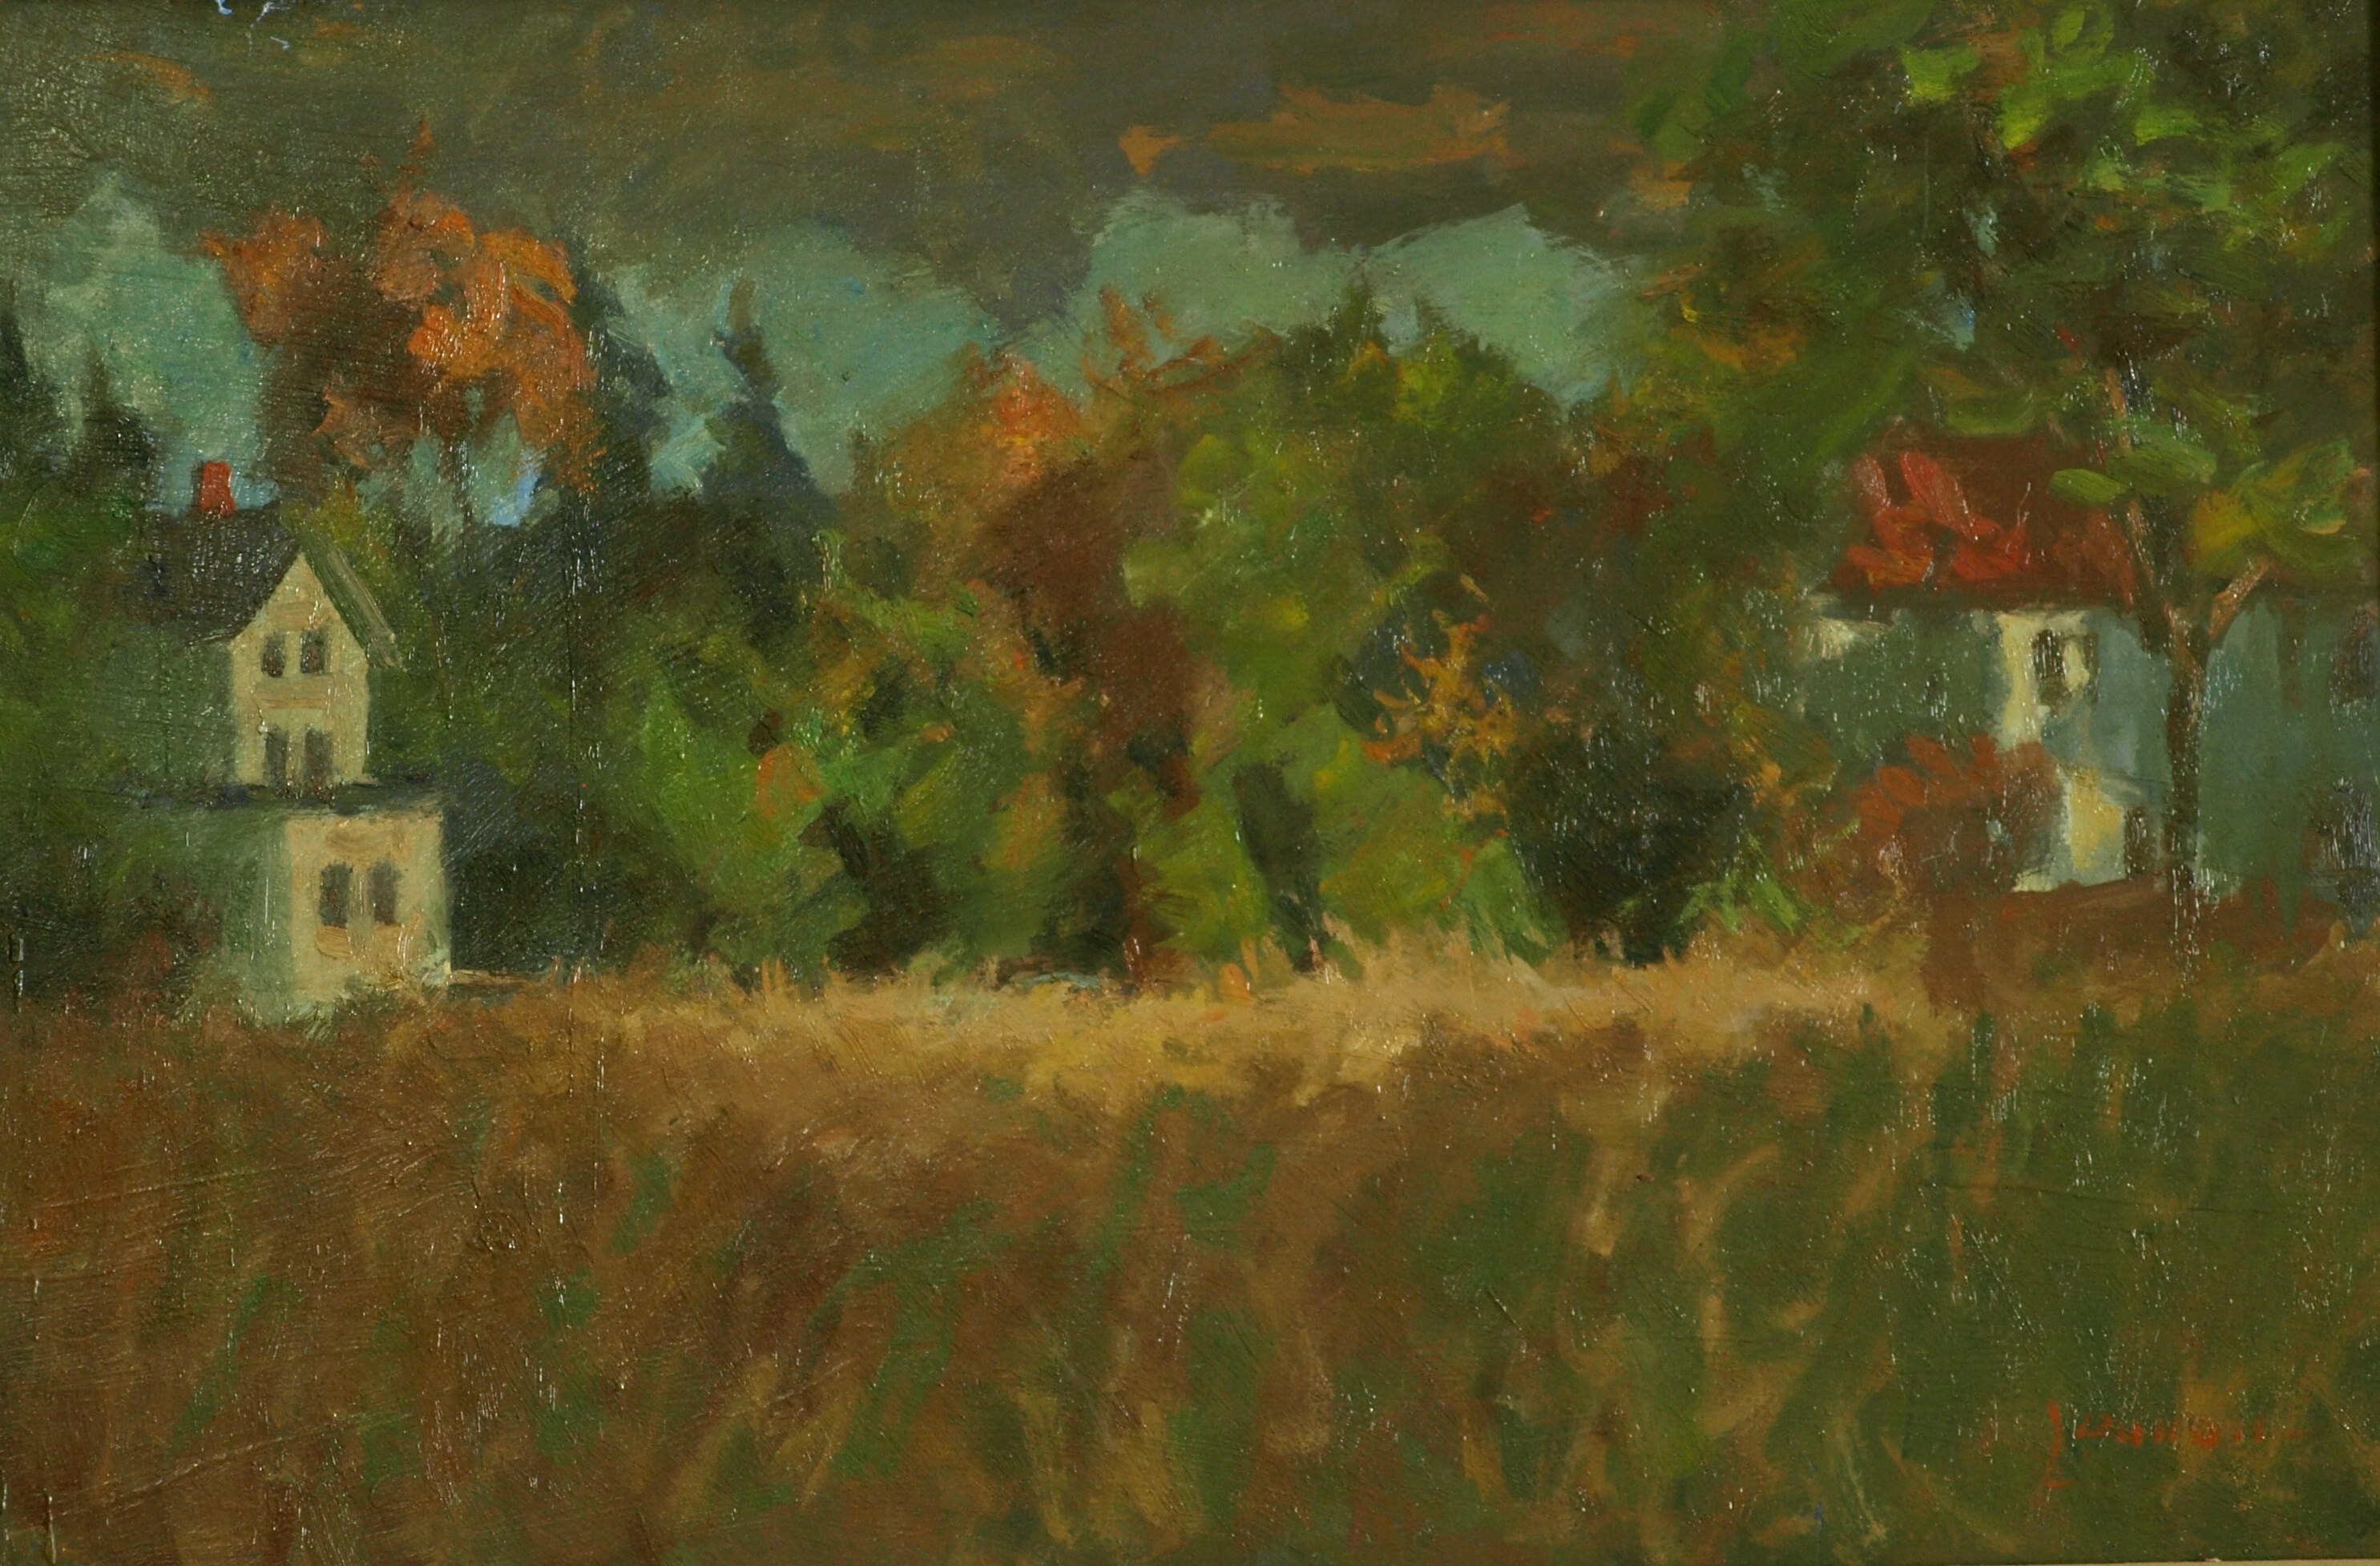 Autumn Splendor, Oil on Panel, 16 x 24 Inches, by Bernard Lennon, $675